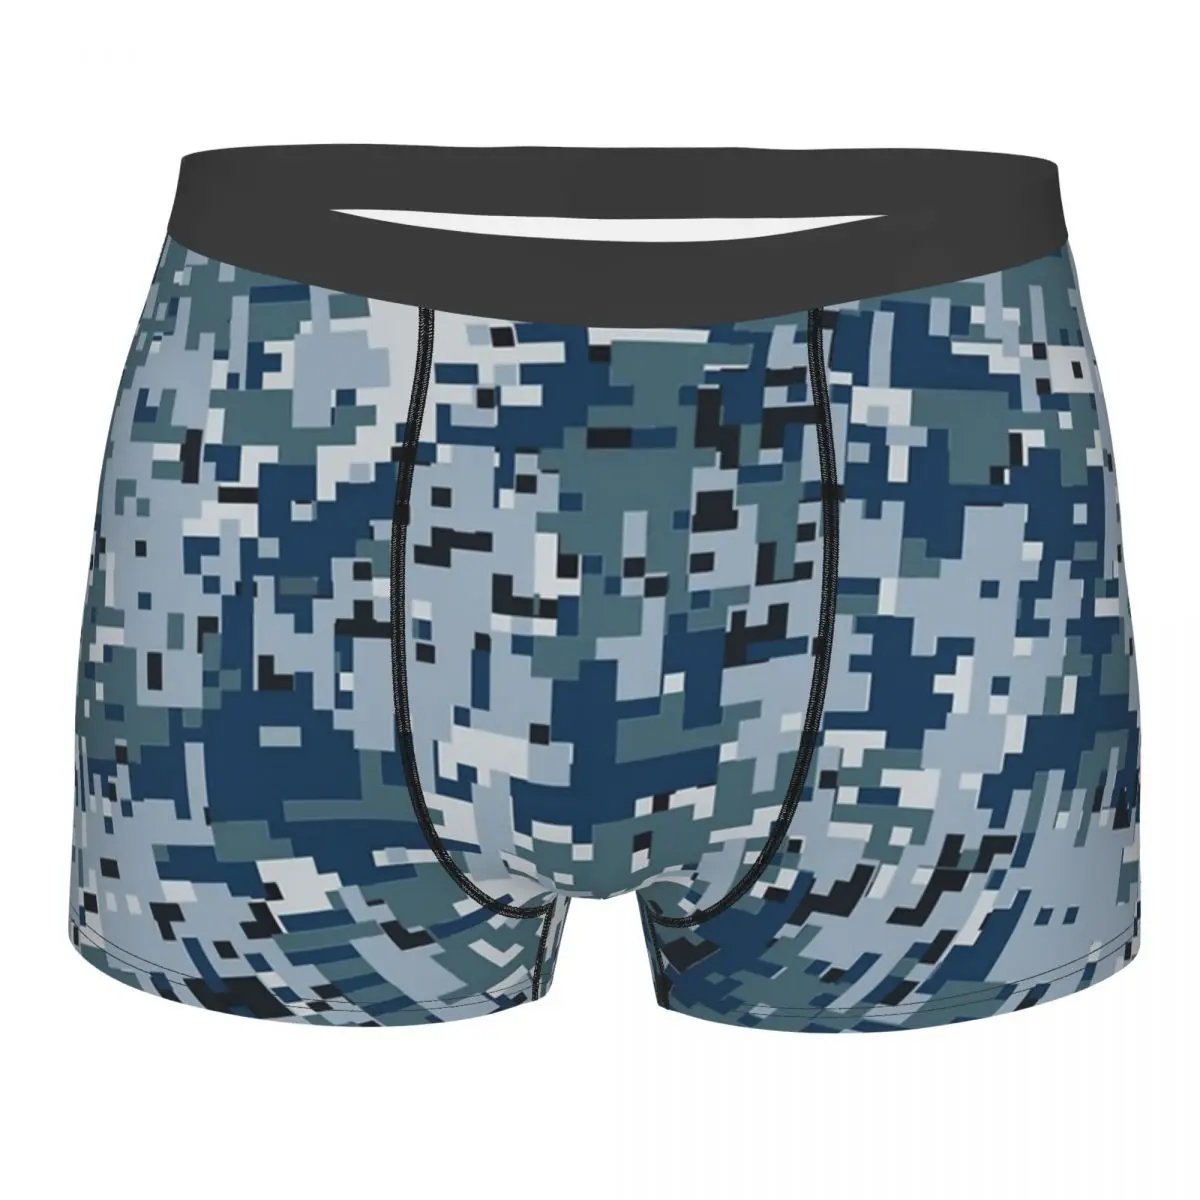 mens underwear sale Funny Boxer Shorts Panties Men's Navy Marine Underwear Camo Multicam Military Breathable Underpants for Male S-XXL best men's briefs Boxers